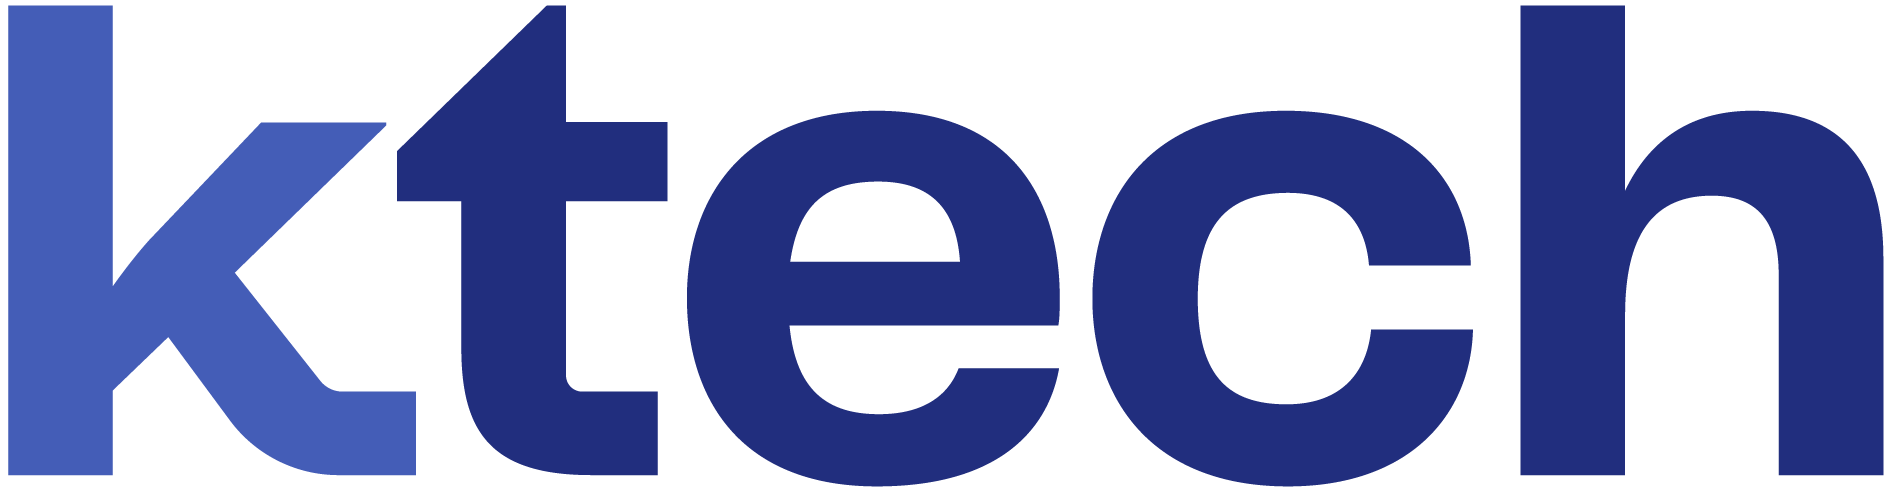 ktech logo